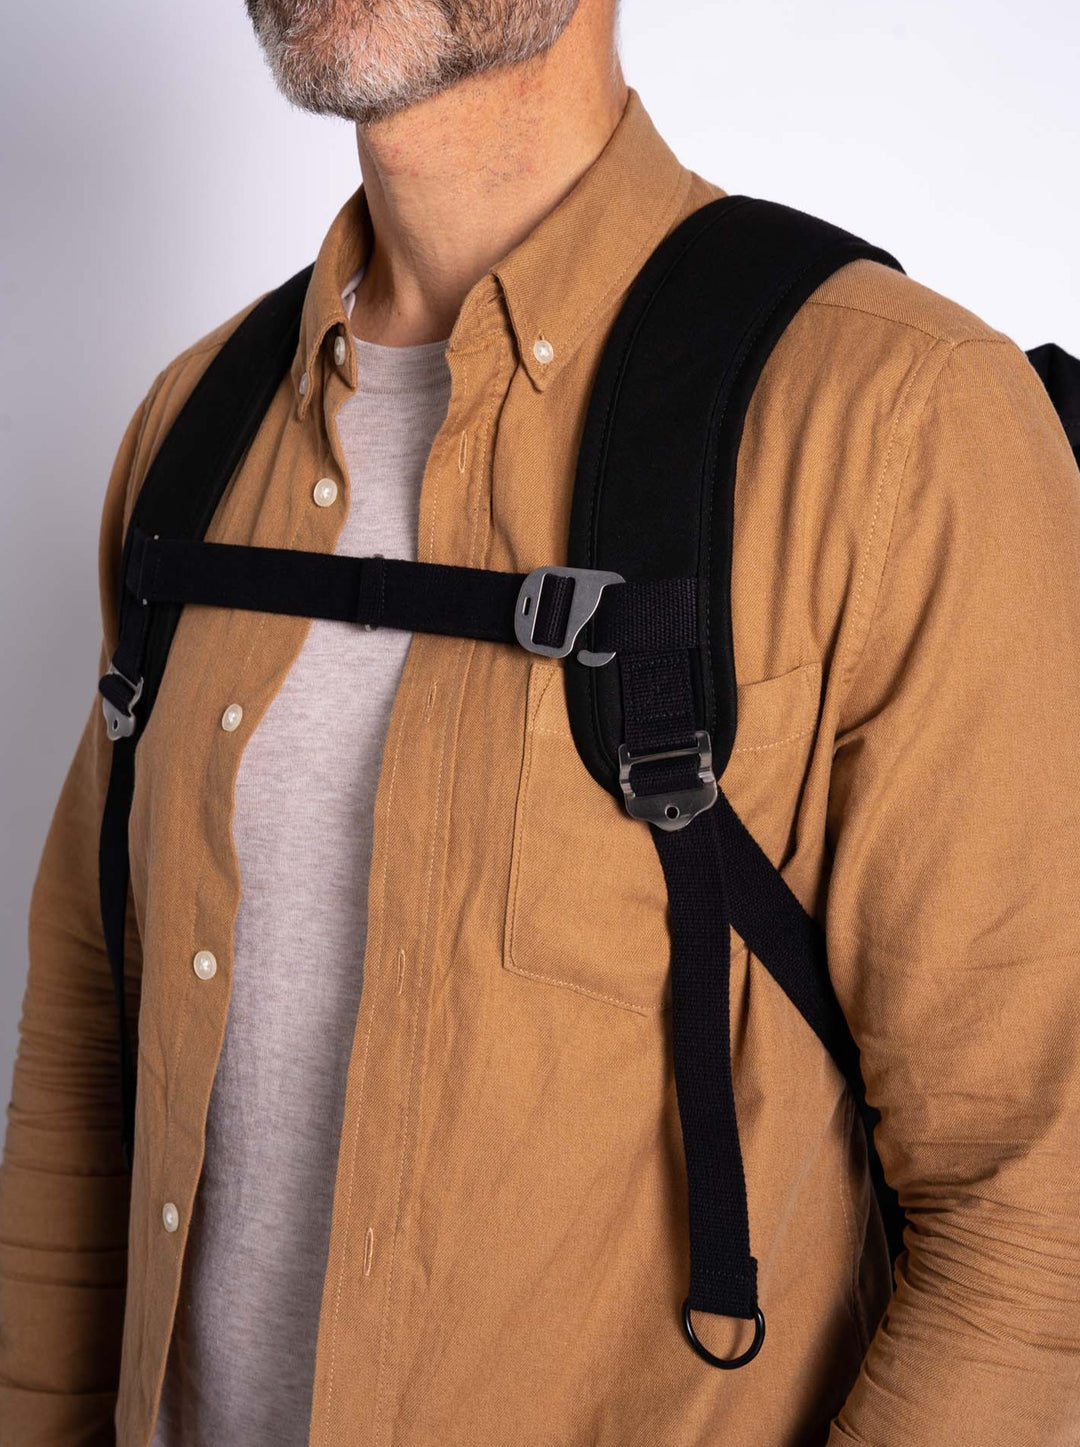 DIY Leather Craft Bag Strap Accessories Shoulder Webbing Buckle